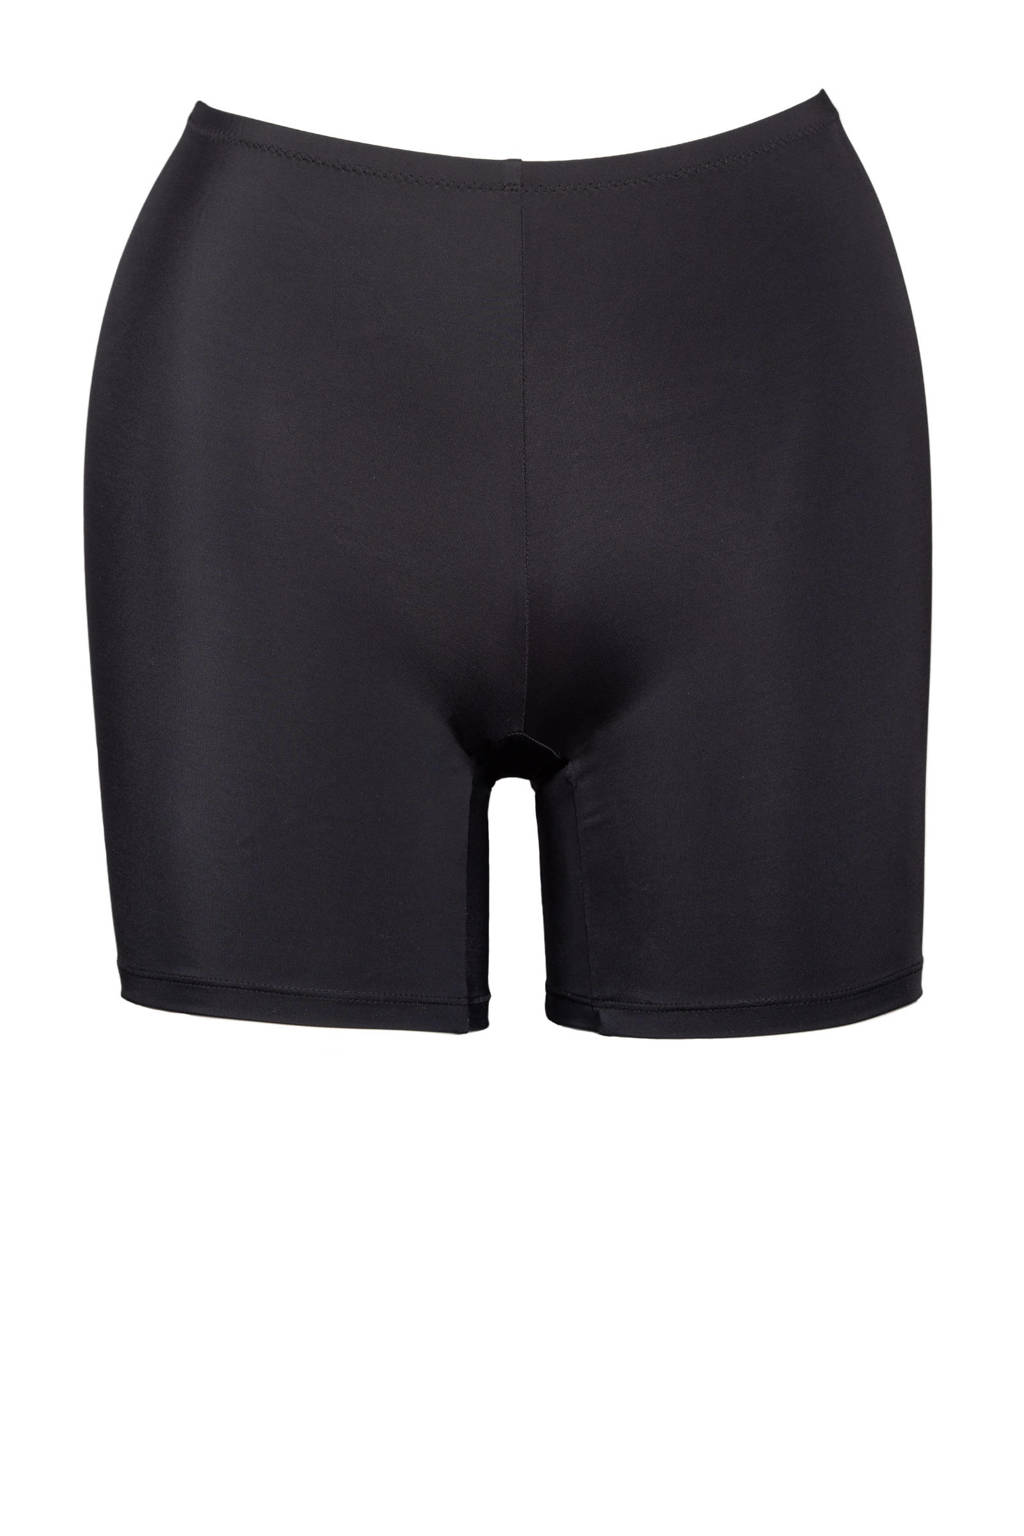 Plaisir +size high short bikinibroekje met zwart wehkamp